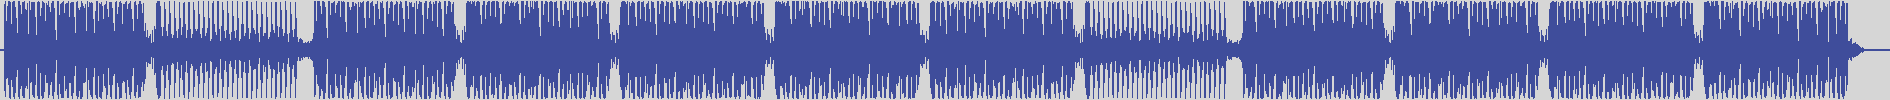 nf_boyz_records [NFY053] Kaldo - Don't Use It [Siren Mix] audio wave form